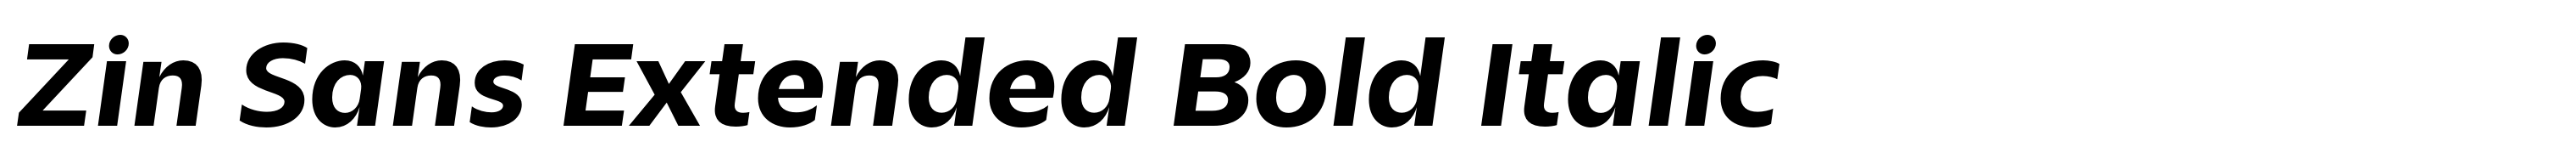 Zin Sans Extended Bold Italic